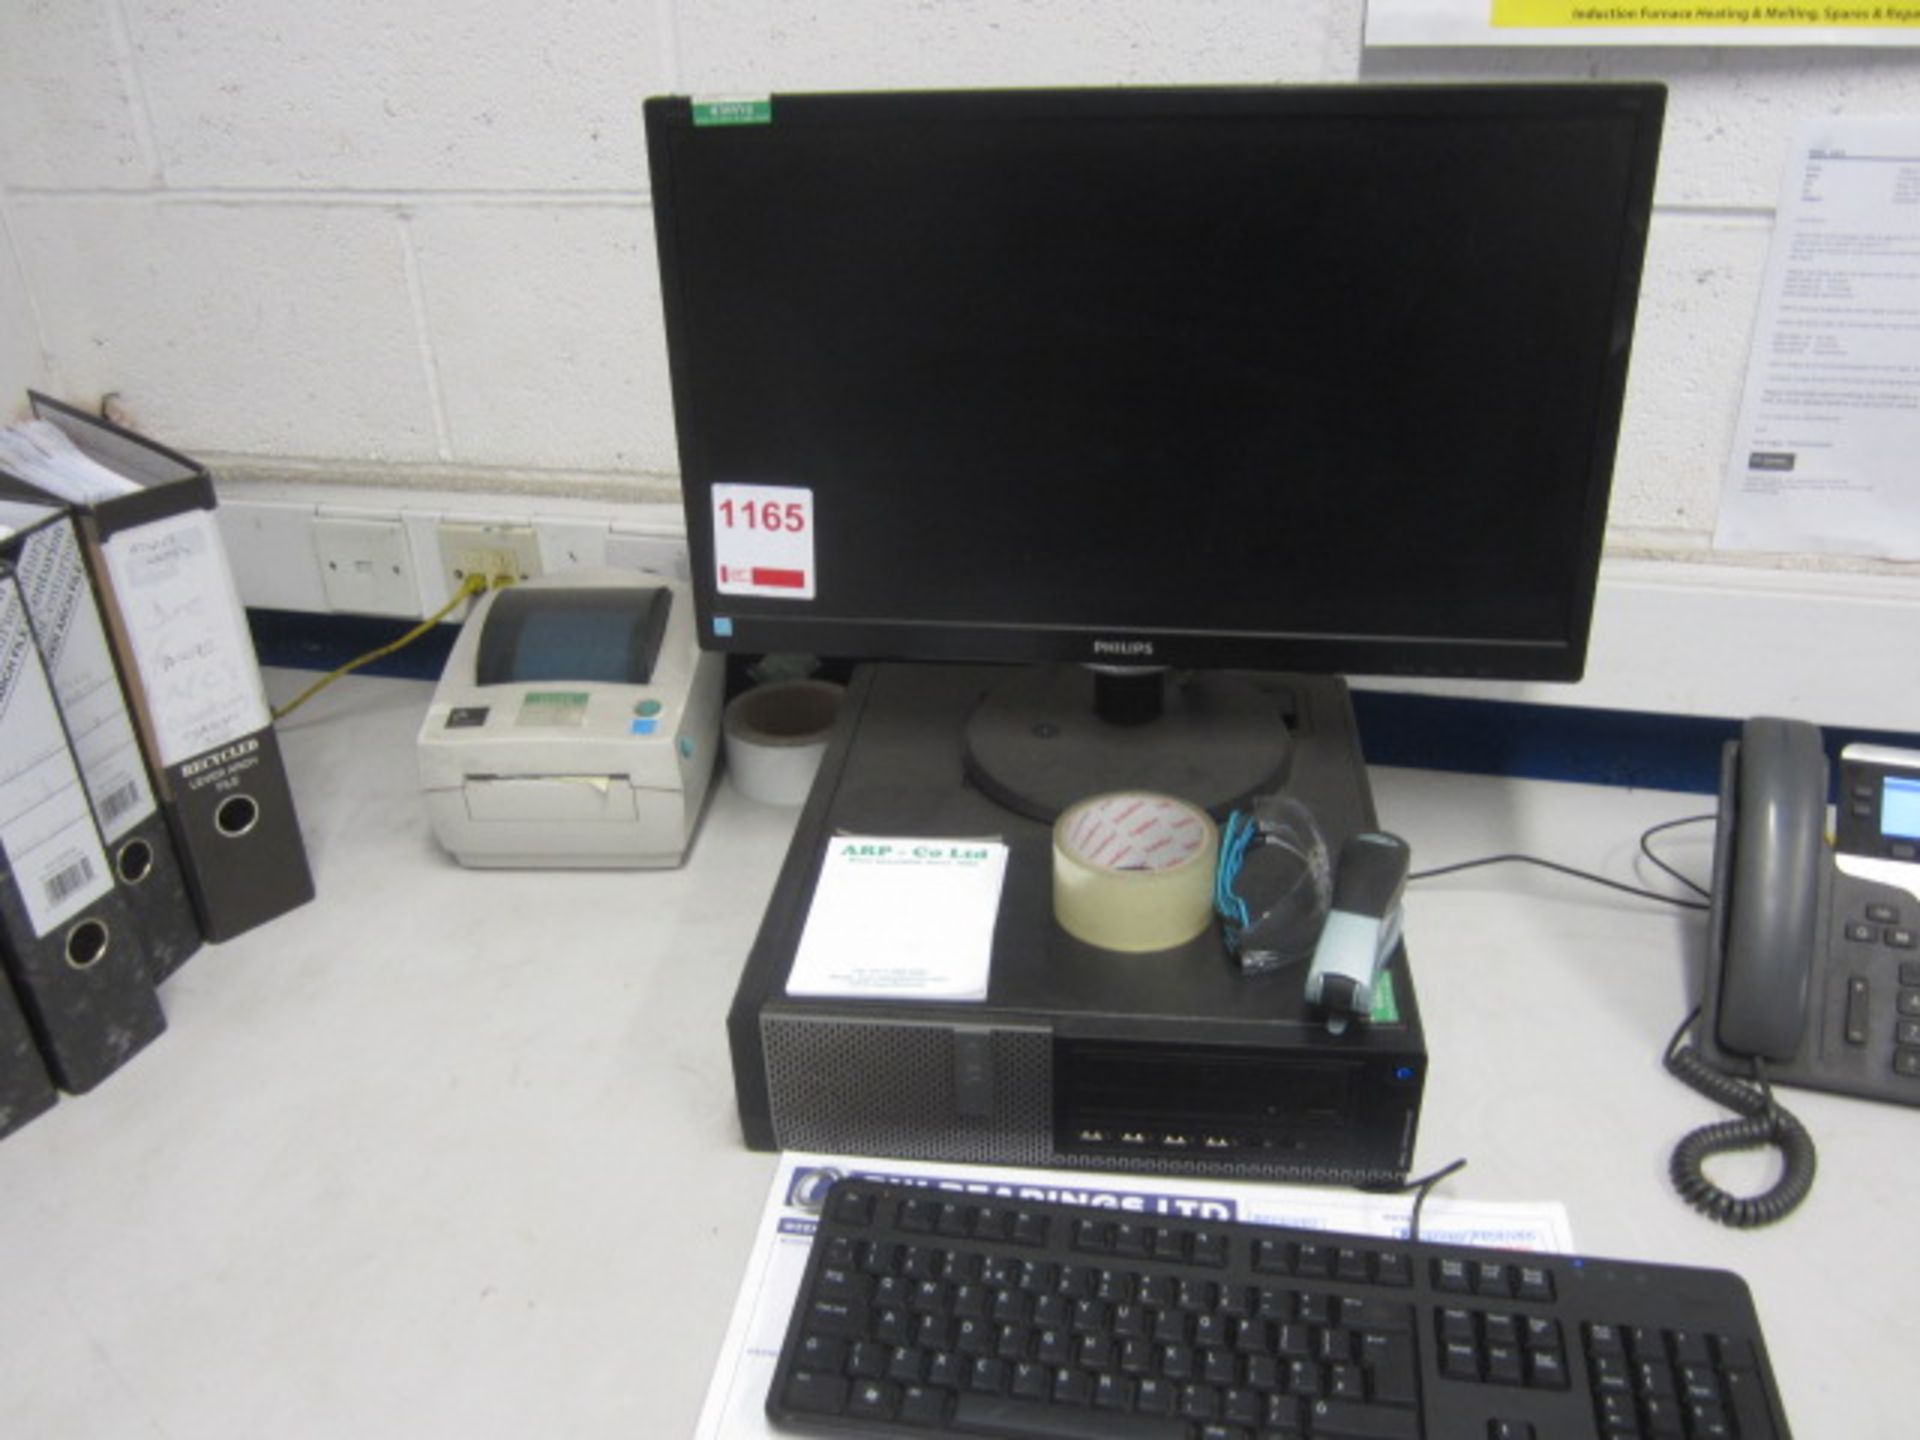 Dell Optiplex 790 computer system, flat screen monitor, keyboard, mouse, Zebra GC420d label printer